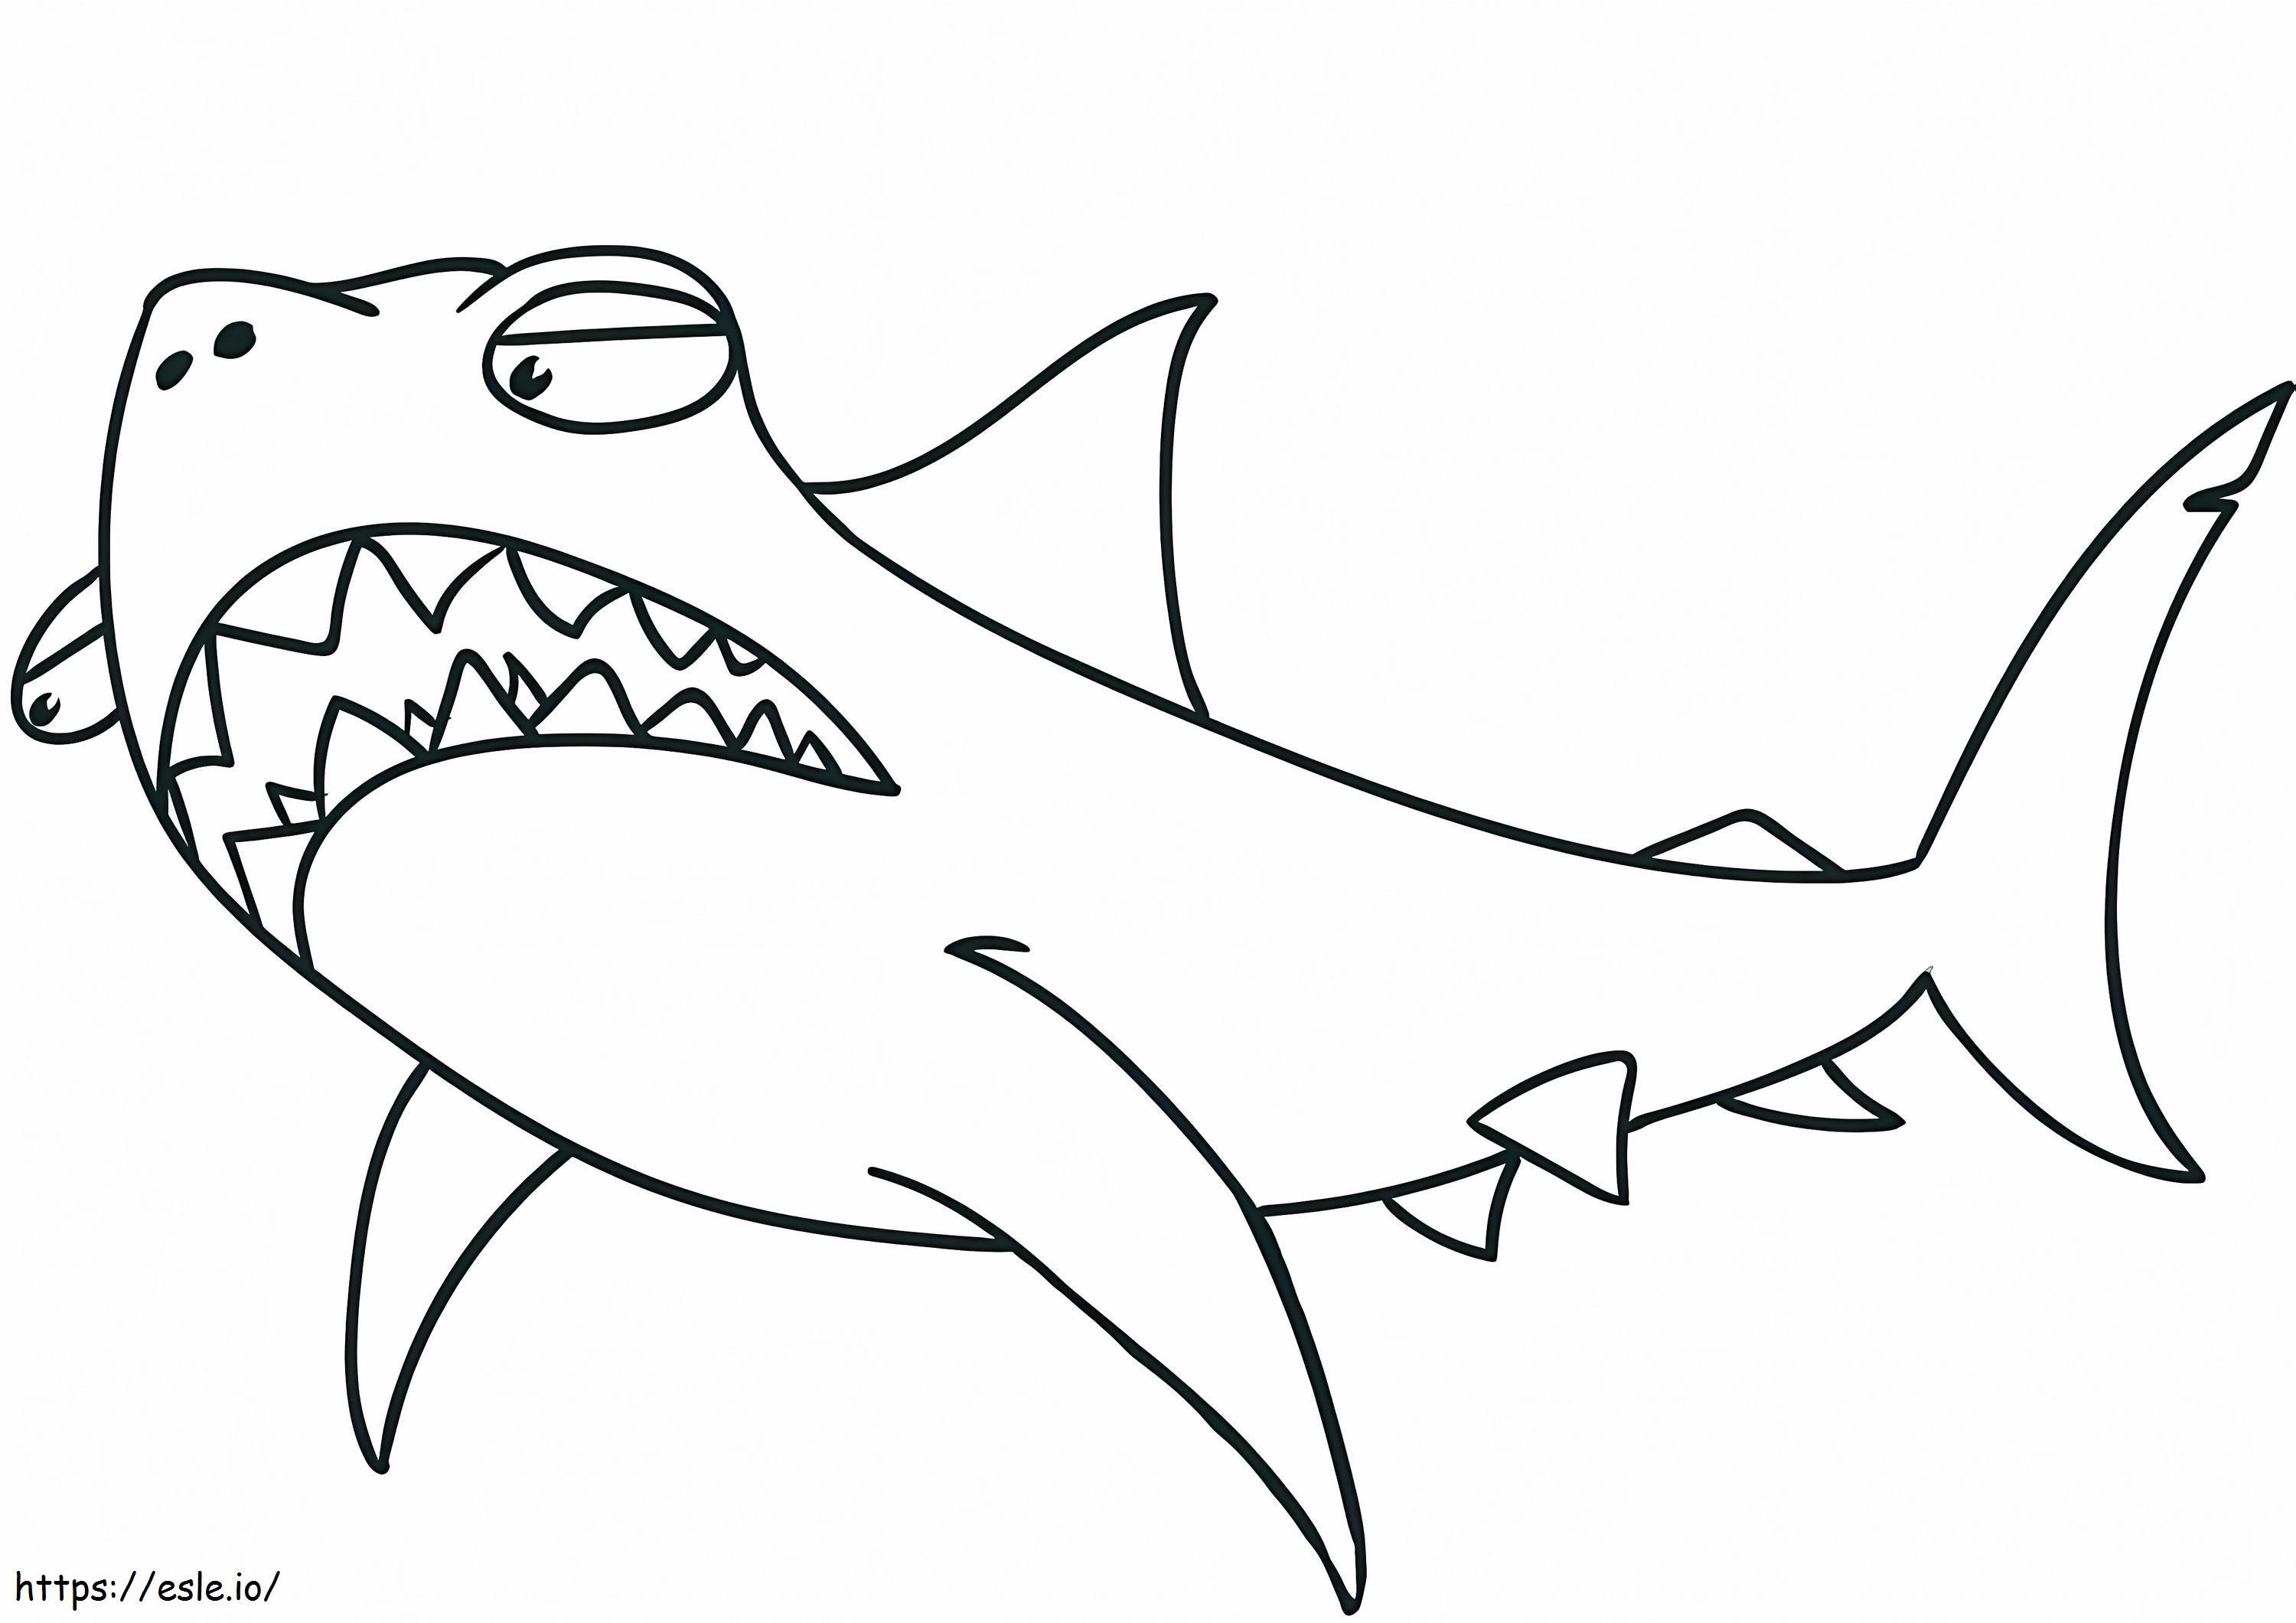 Cartoon lustiger Hai ausmalbilder